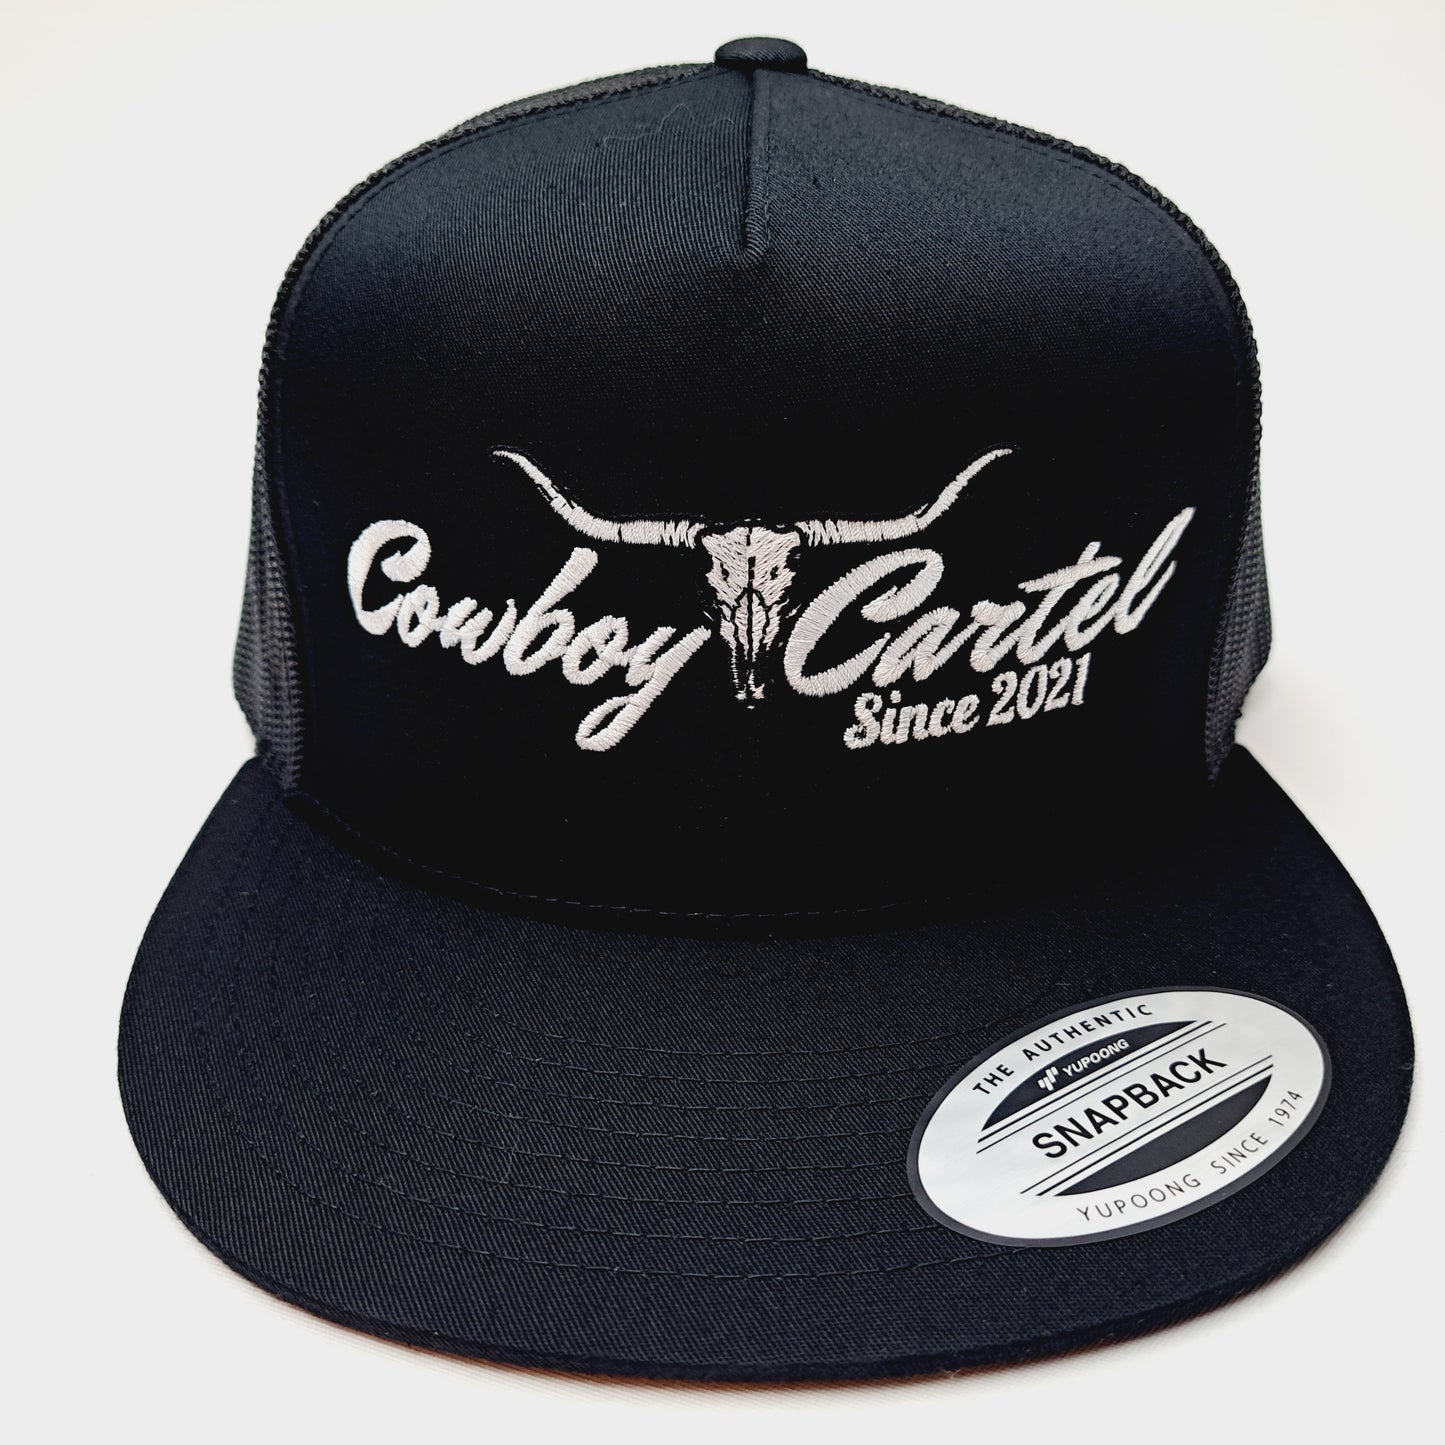 Cowboy Cartel Flat Bill Mesh Snapback Black Cap Hat Embroidered